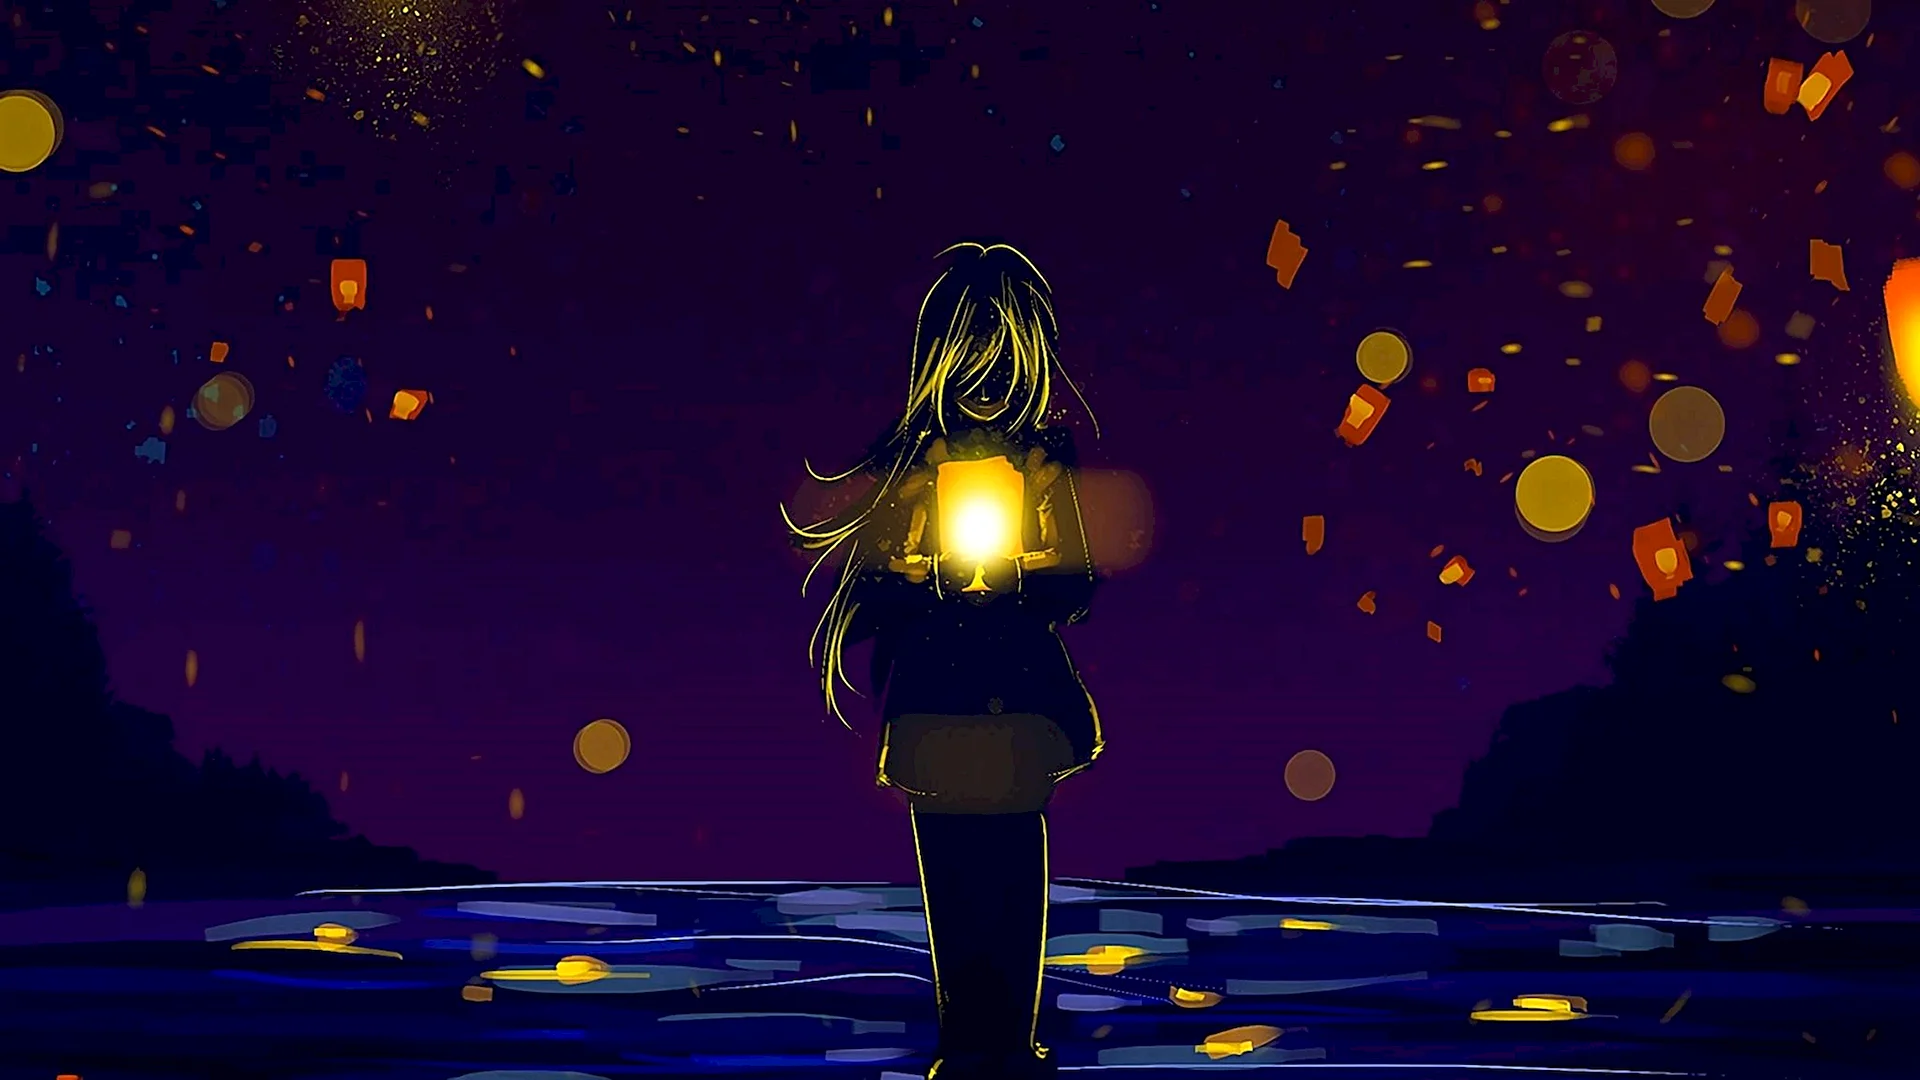 Loneliness Art Anime Wallpaper